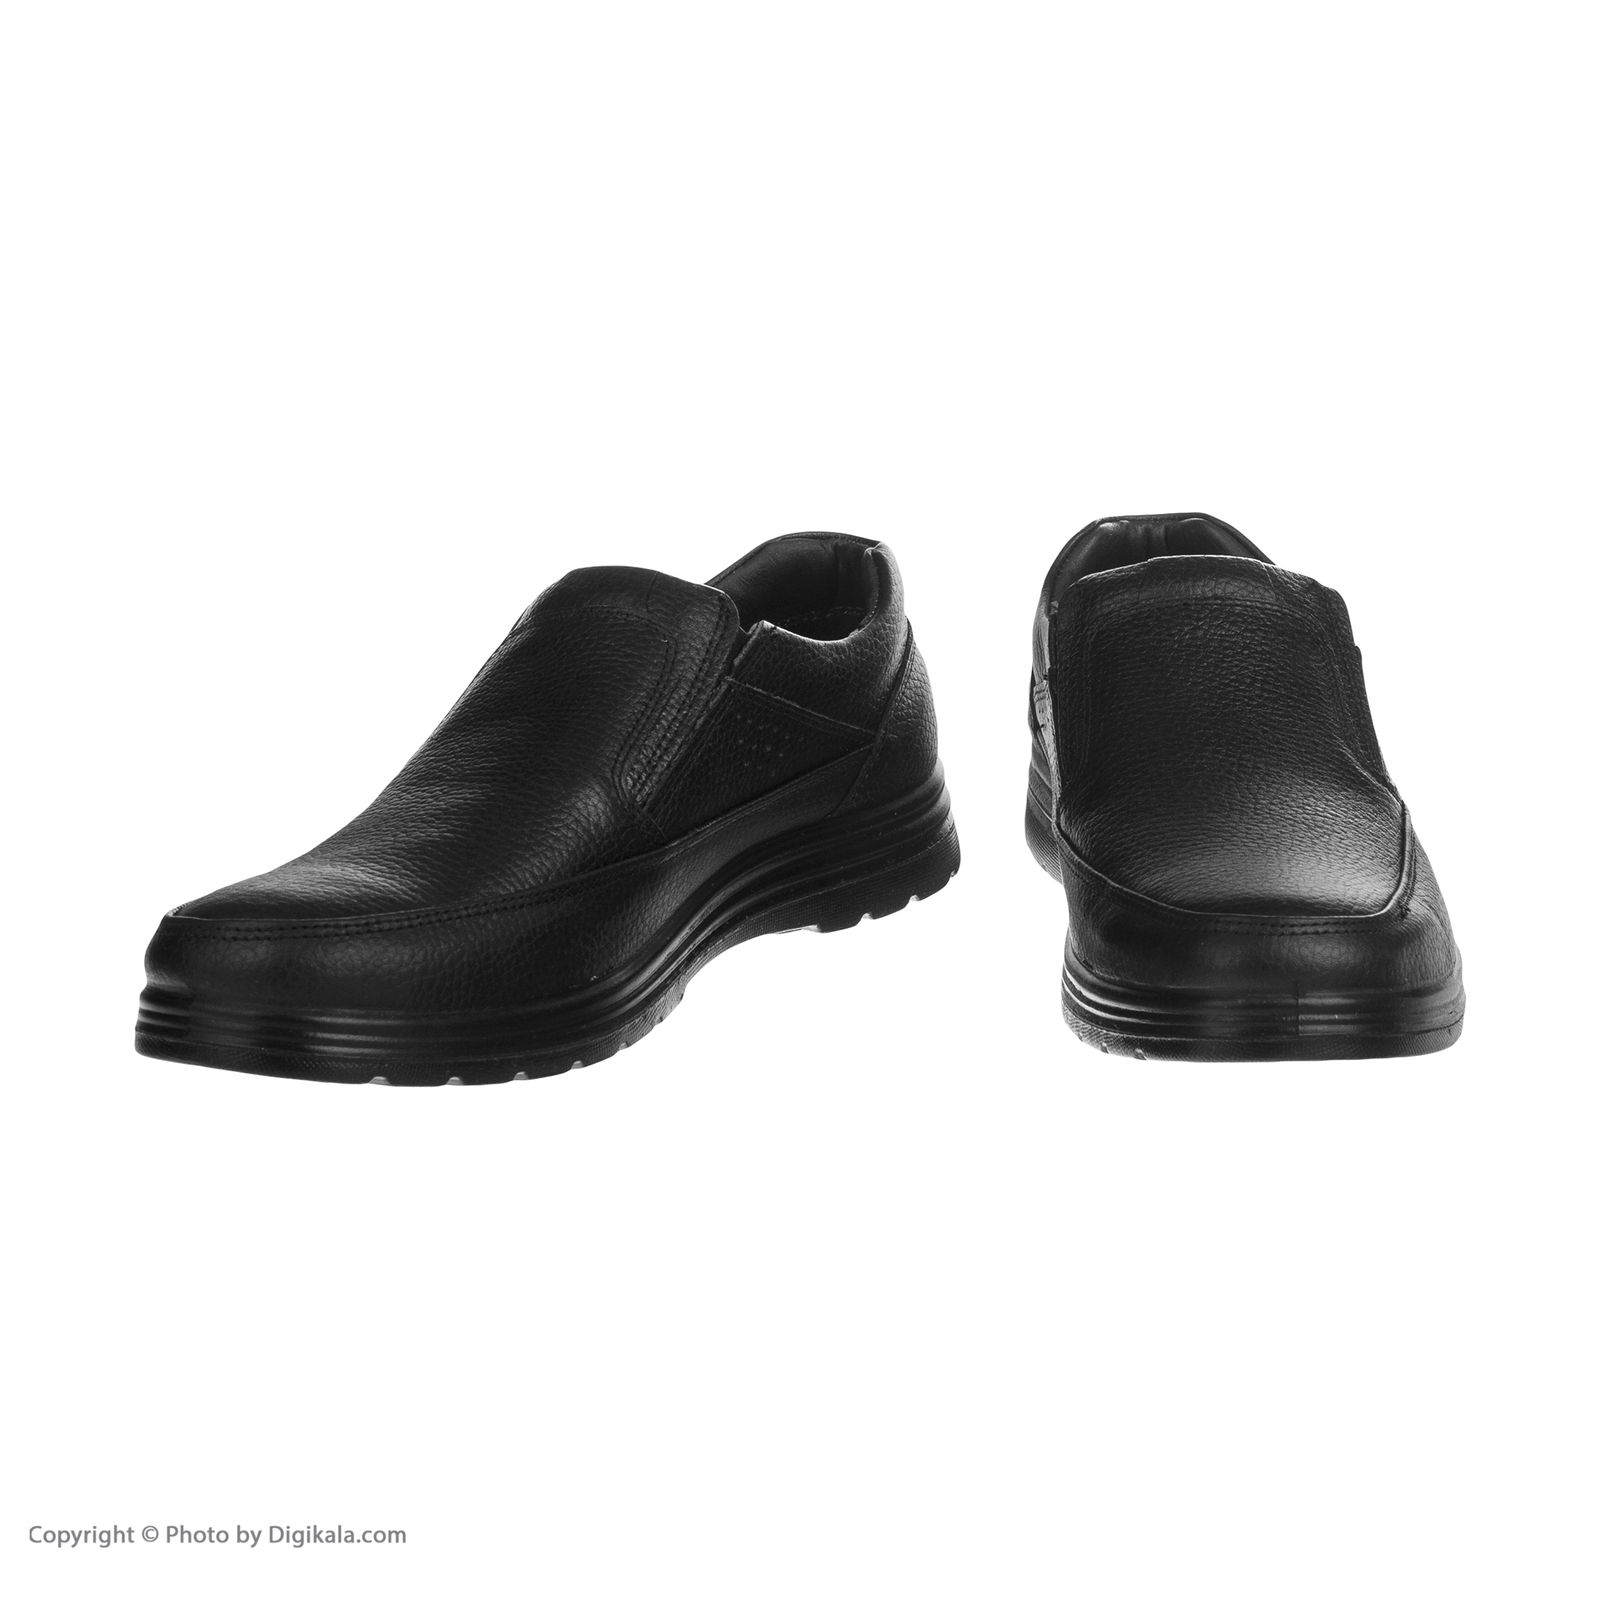 کفش روزمره مردانه شیفر مدل 7237a503101 - مشکی - 6